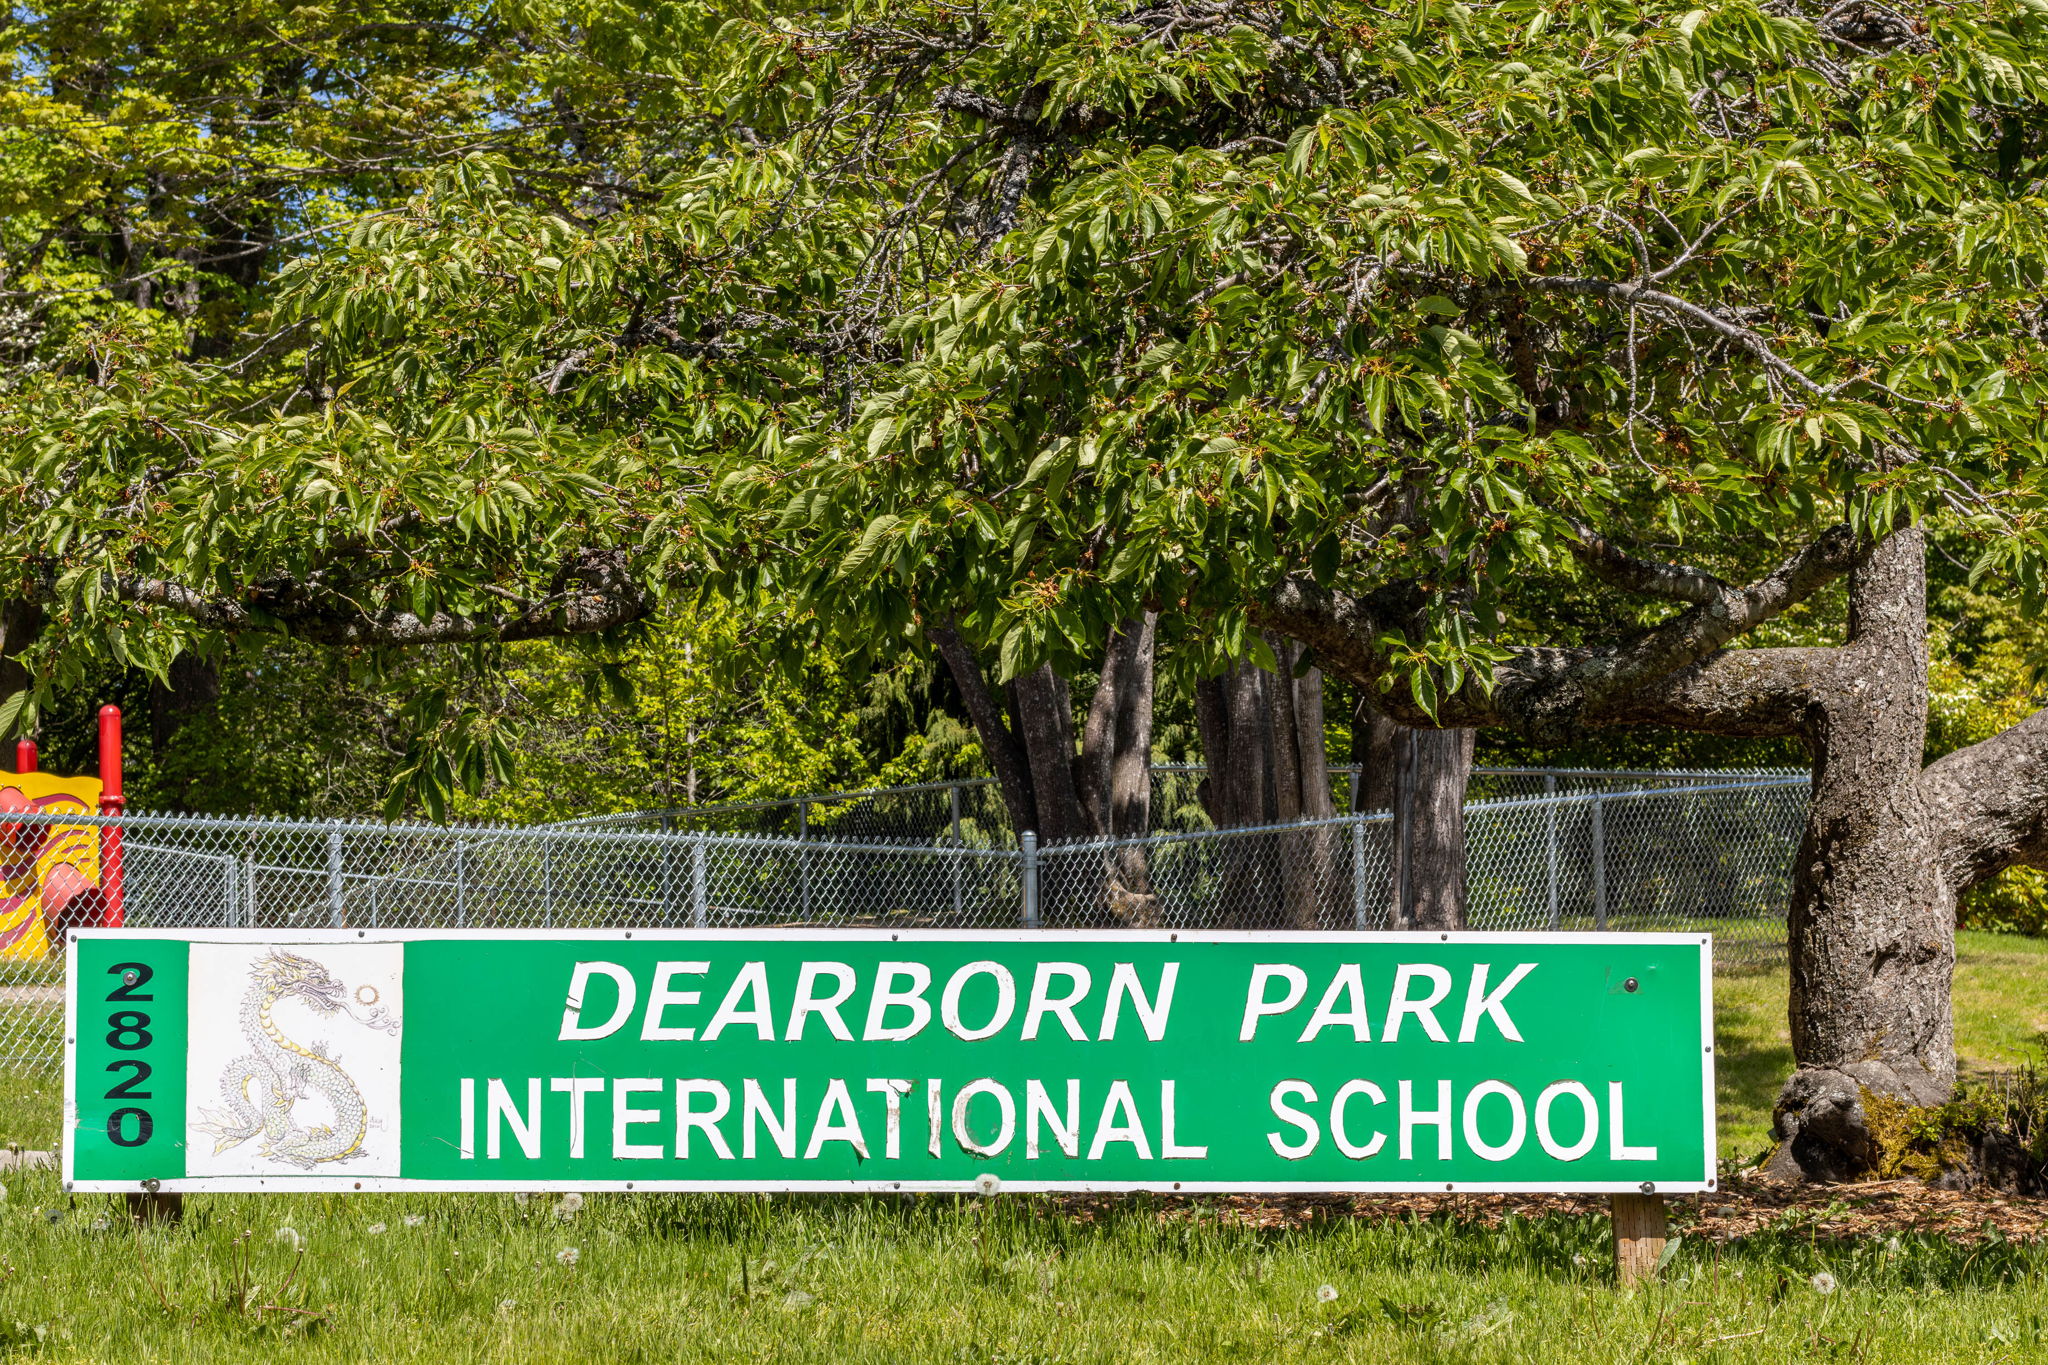 DEARBORN PARK INTERNATIONAL ELEMENTARY SCHOOL